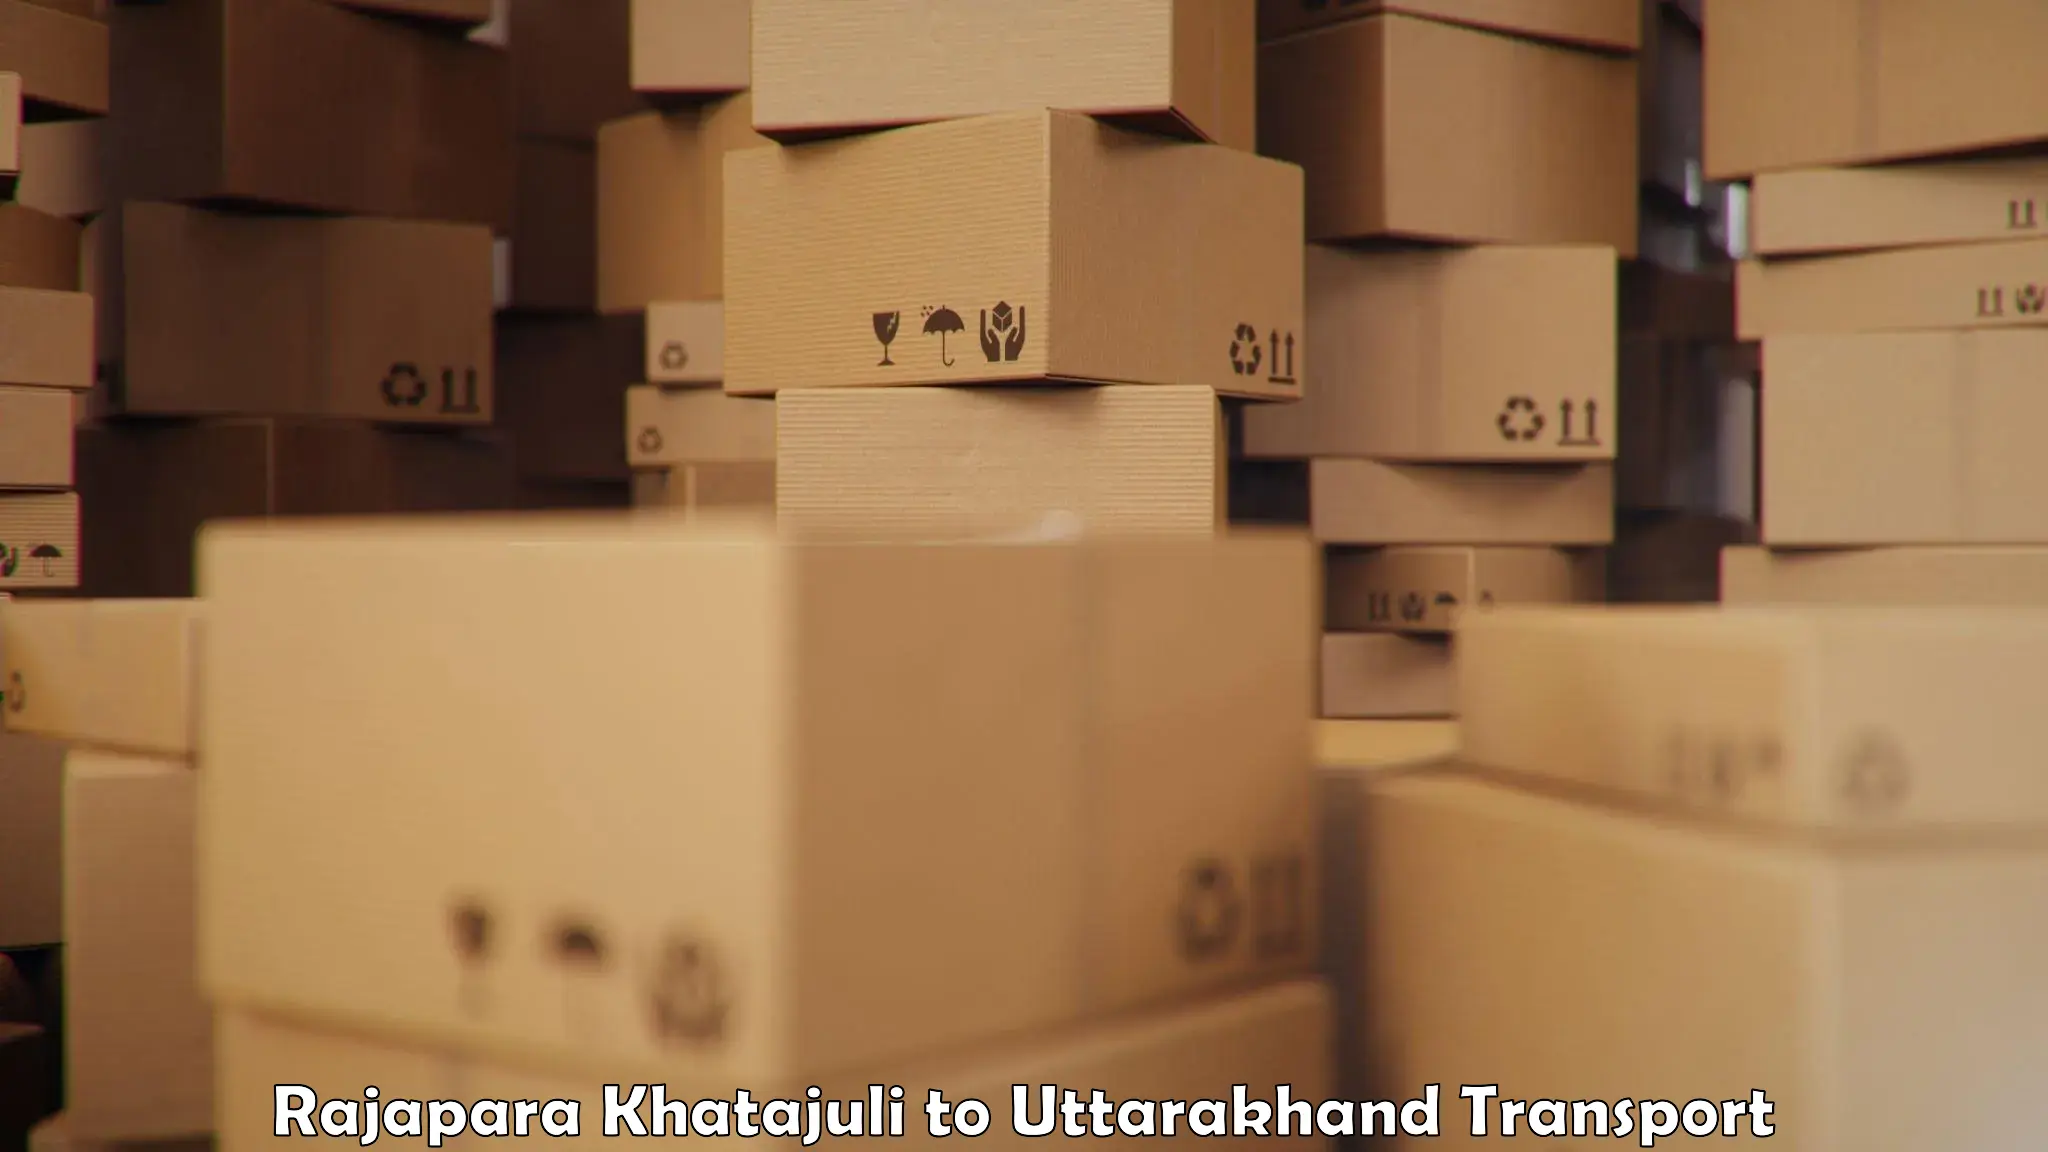 Shipping services Rajapara Khatajuli to Rishikesh